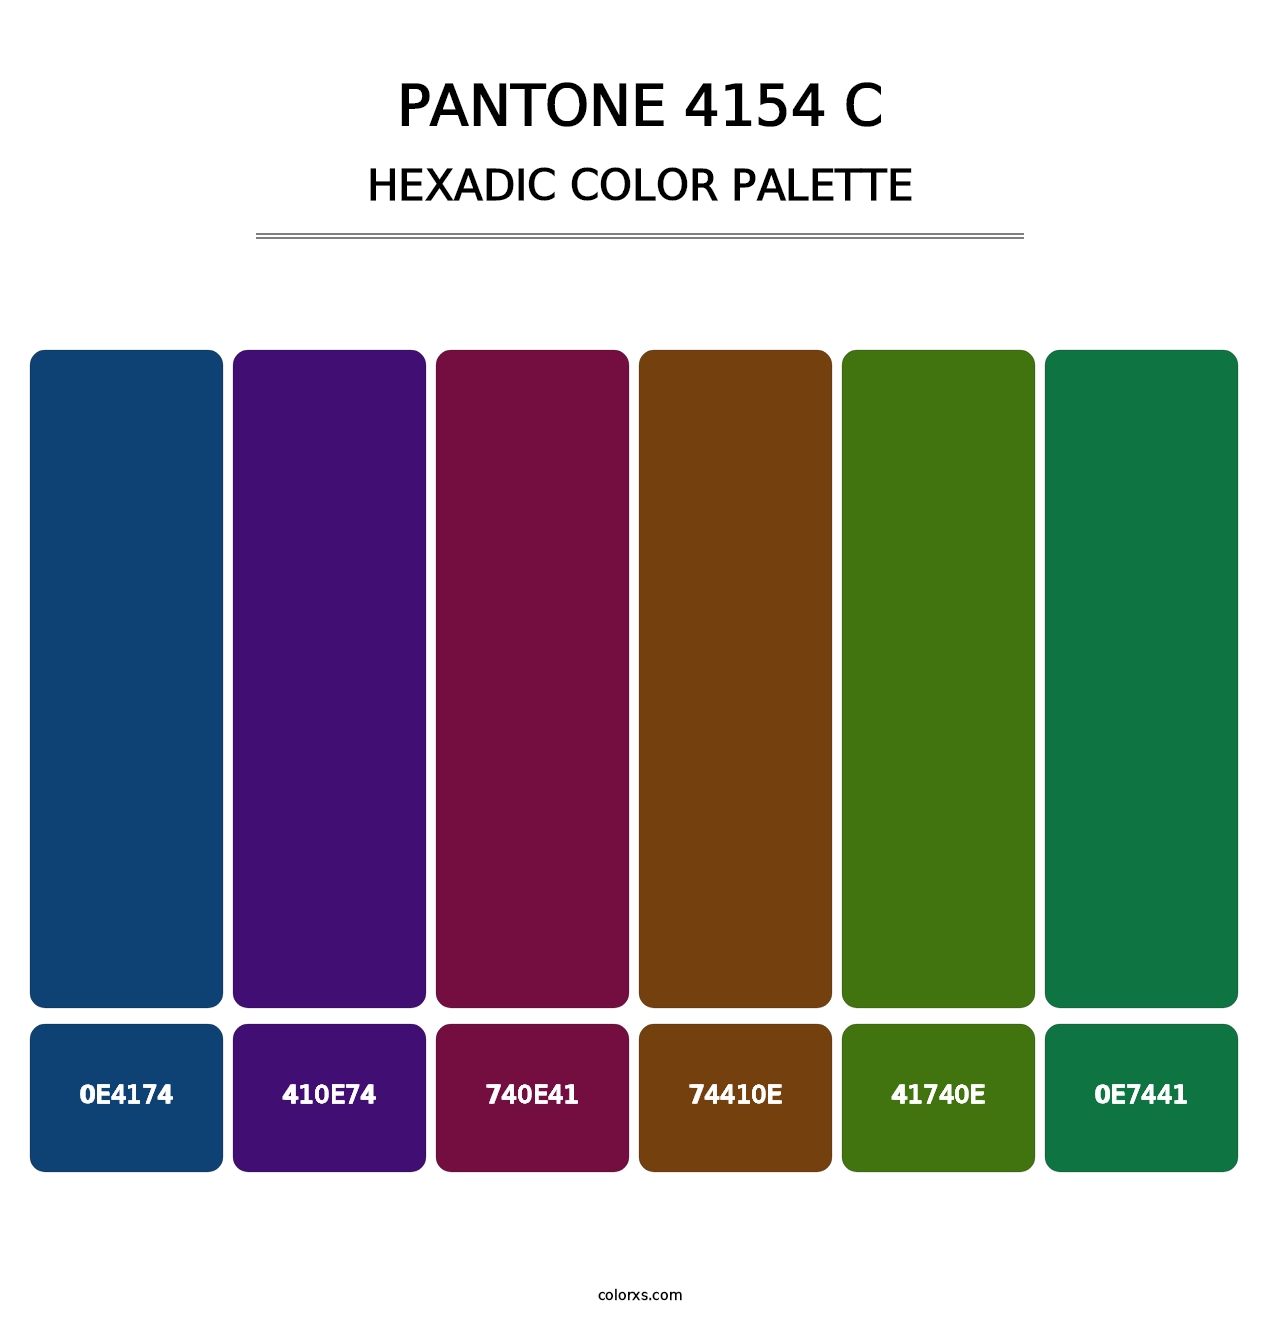 PANTONE 4154 C - Hexadic Color Palette